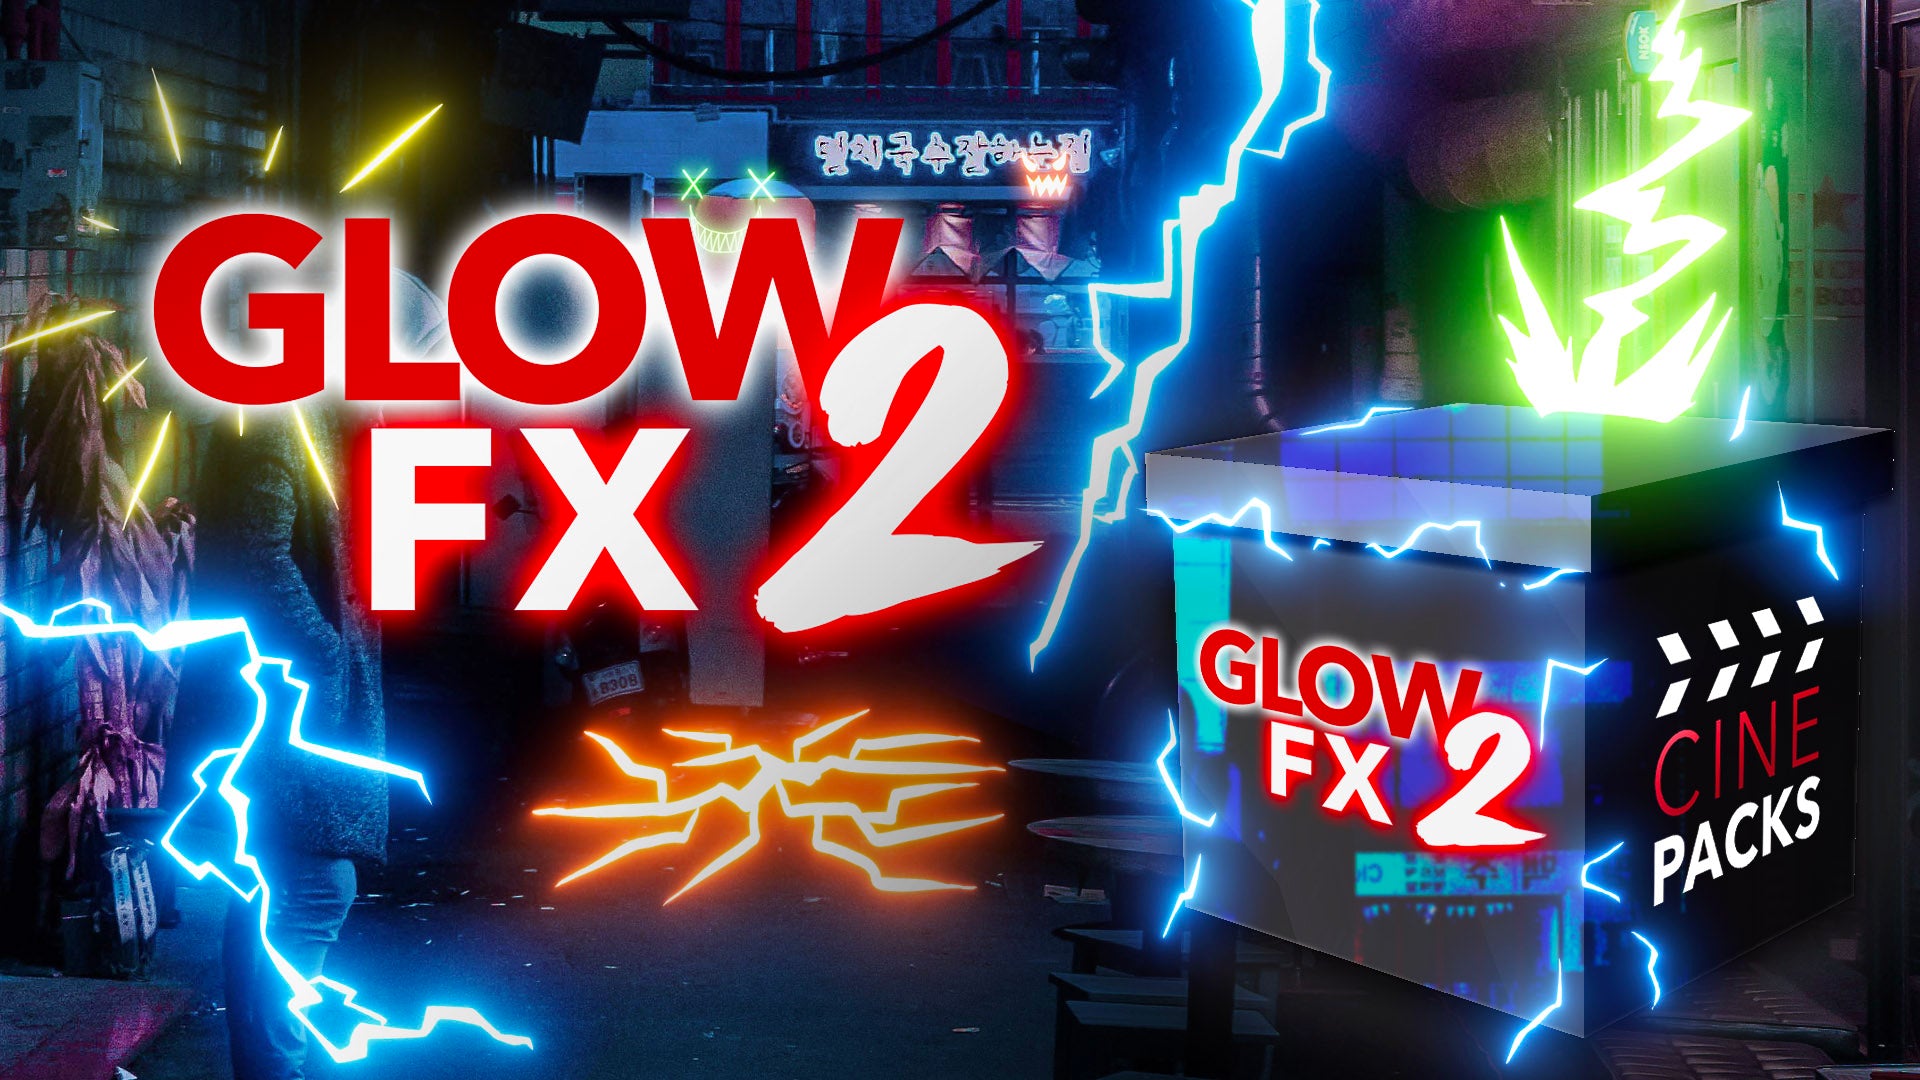 GLOW FX 2 - CinePacks